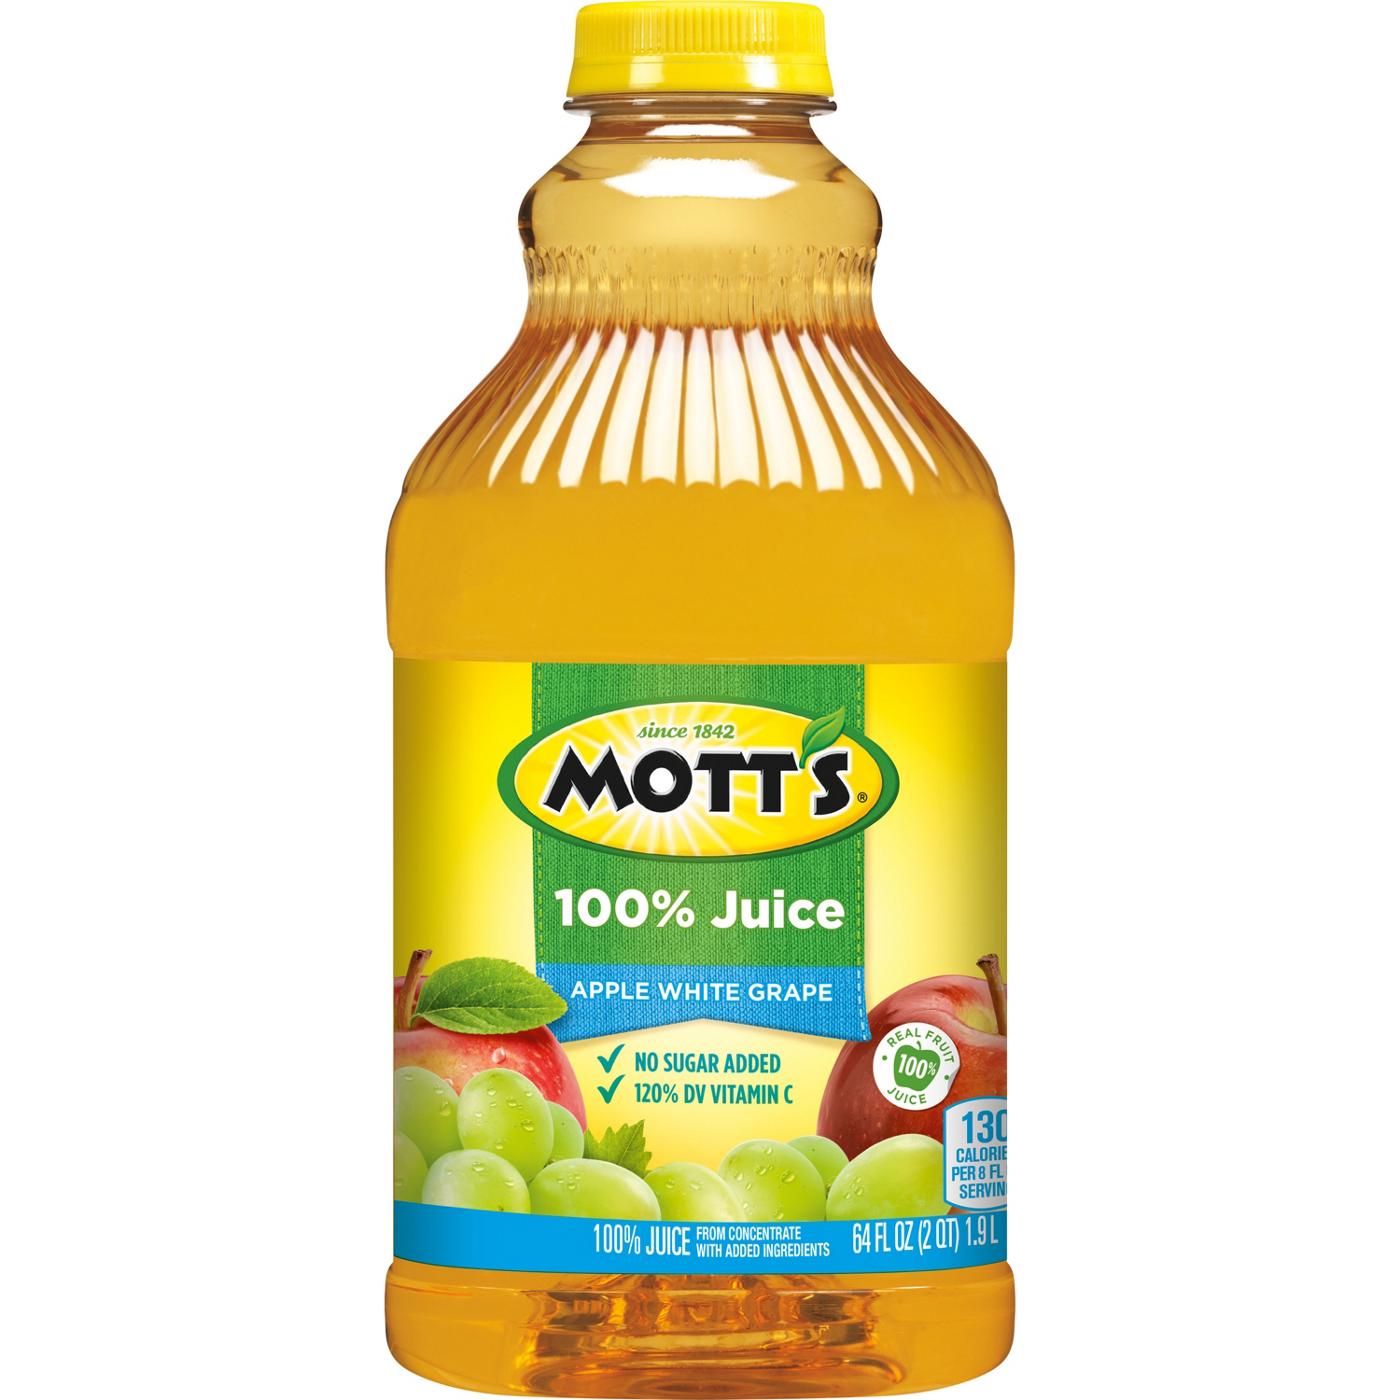 Mott's 100% Juice Apple White Grape; image 1 of 5